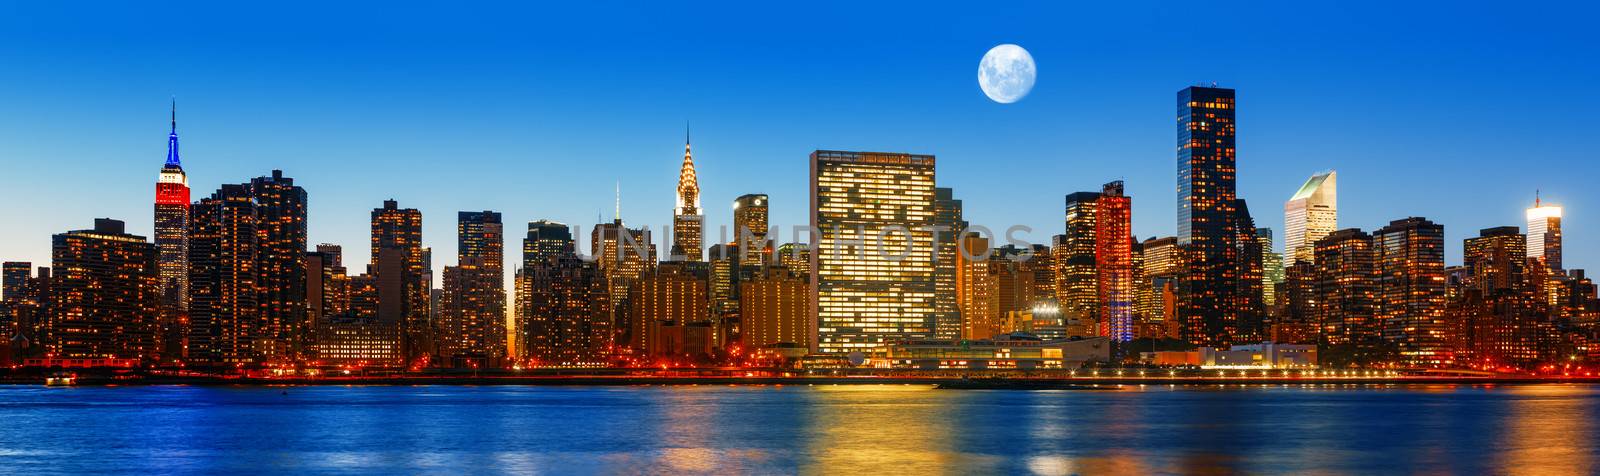 Late evening New York City skyline panorama by palinchak